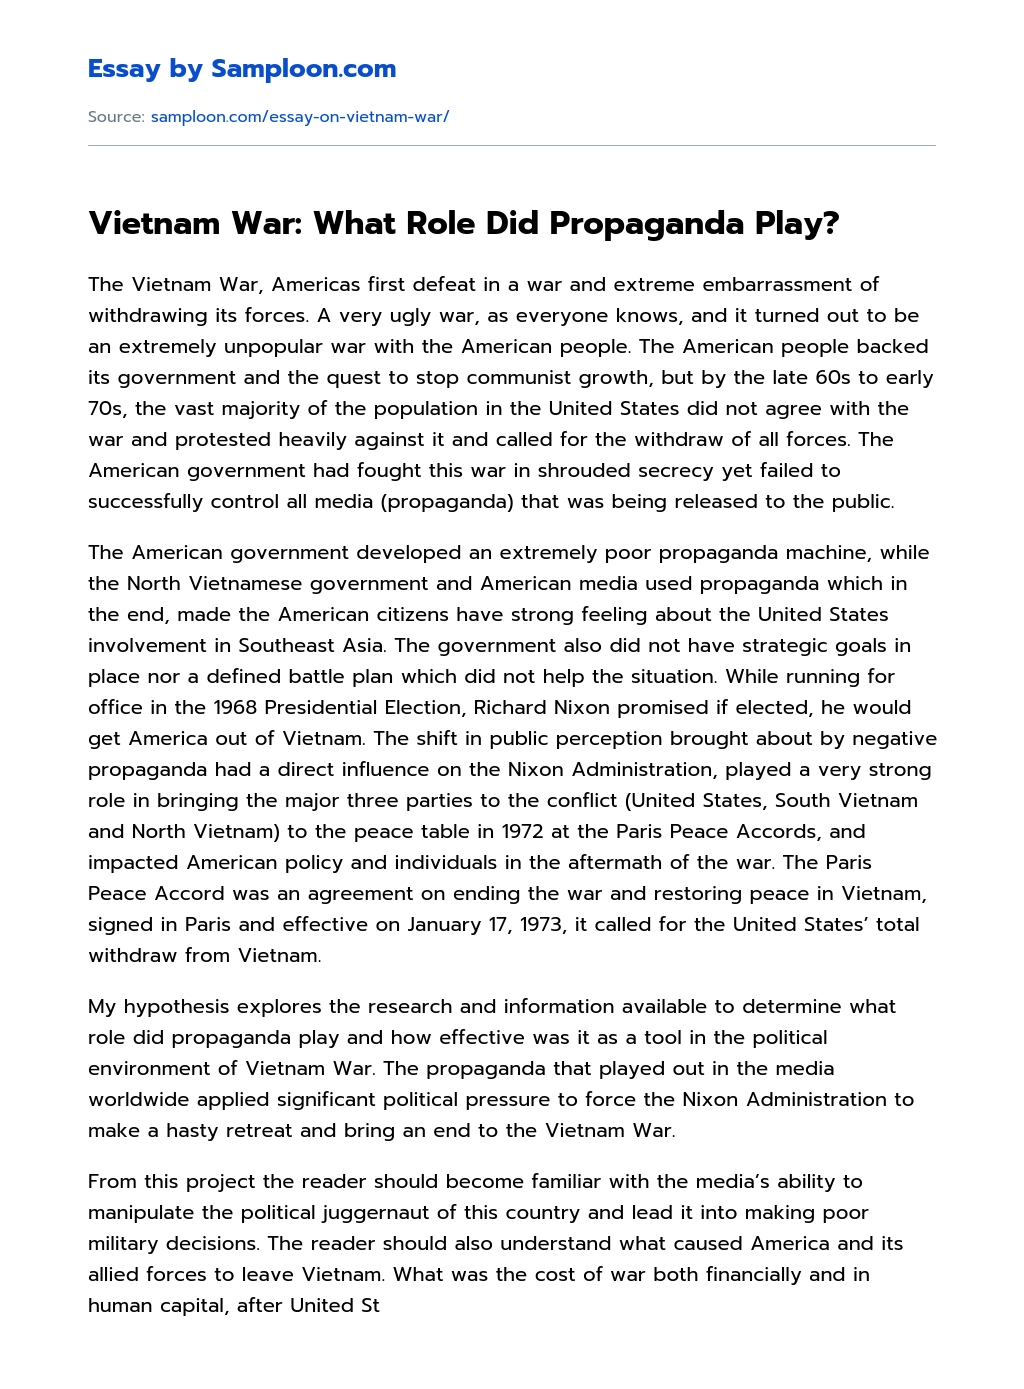 Vietnam War: What Role Did Propaganda Play? essay